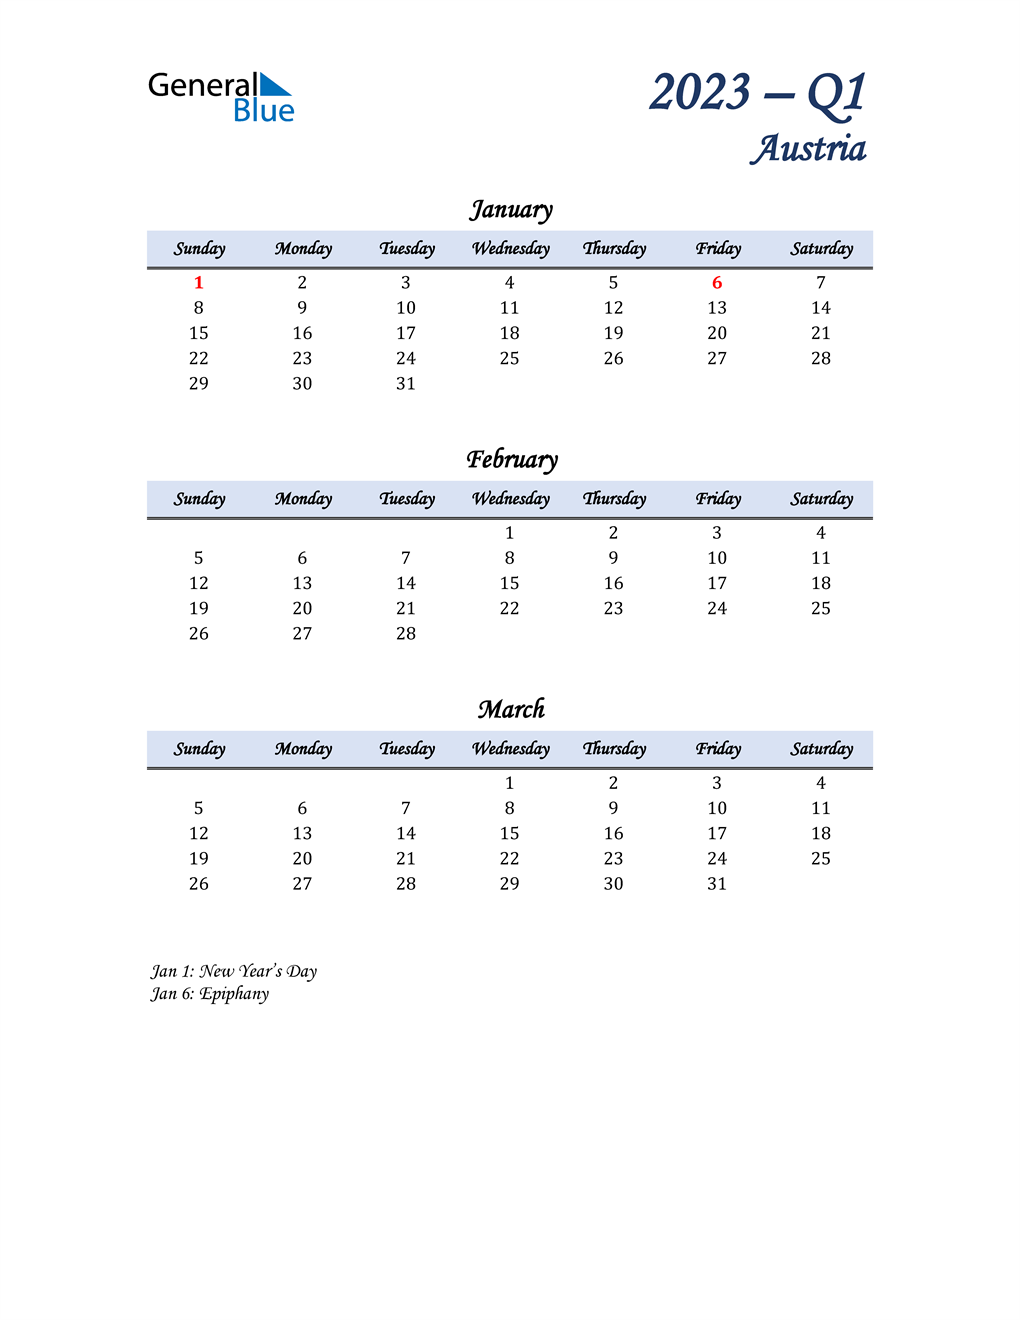  January, February, and March Calendar for Austria